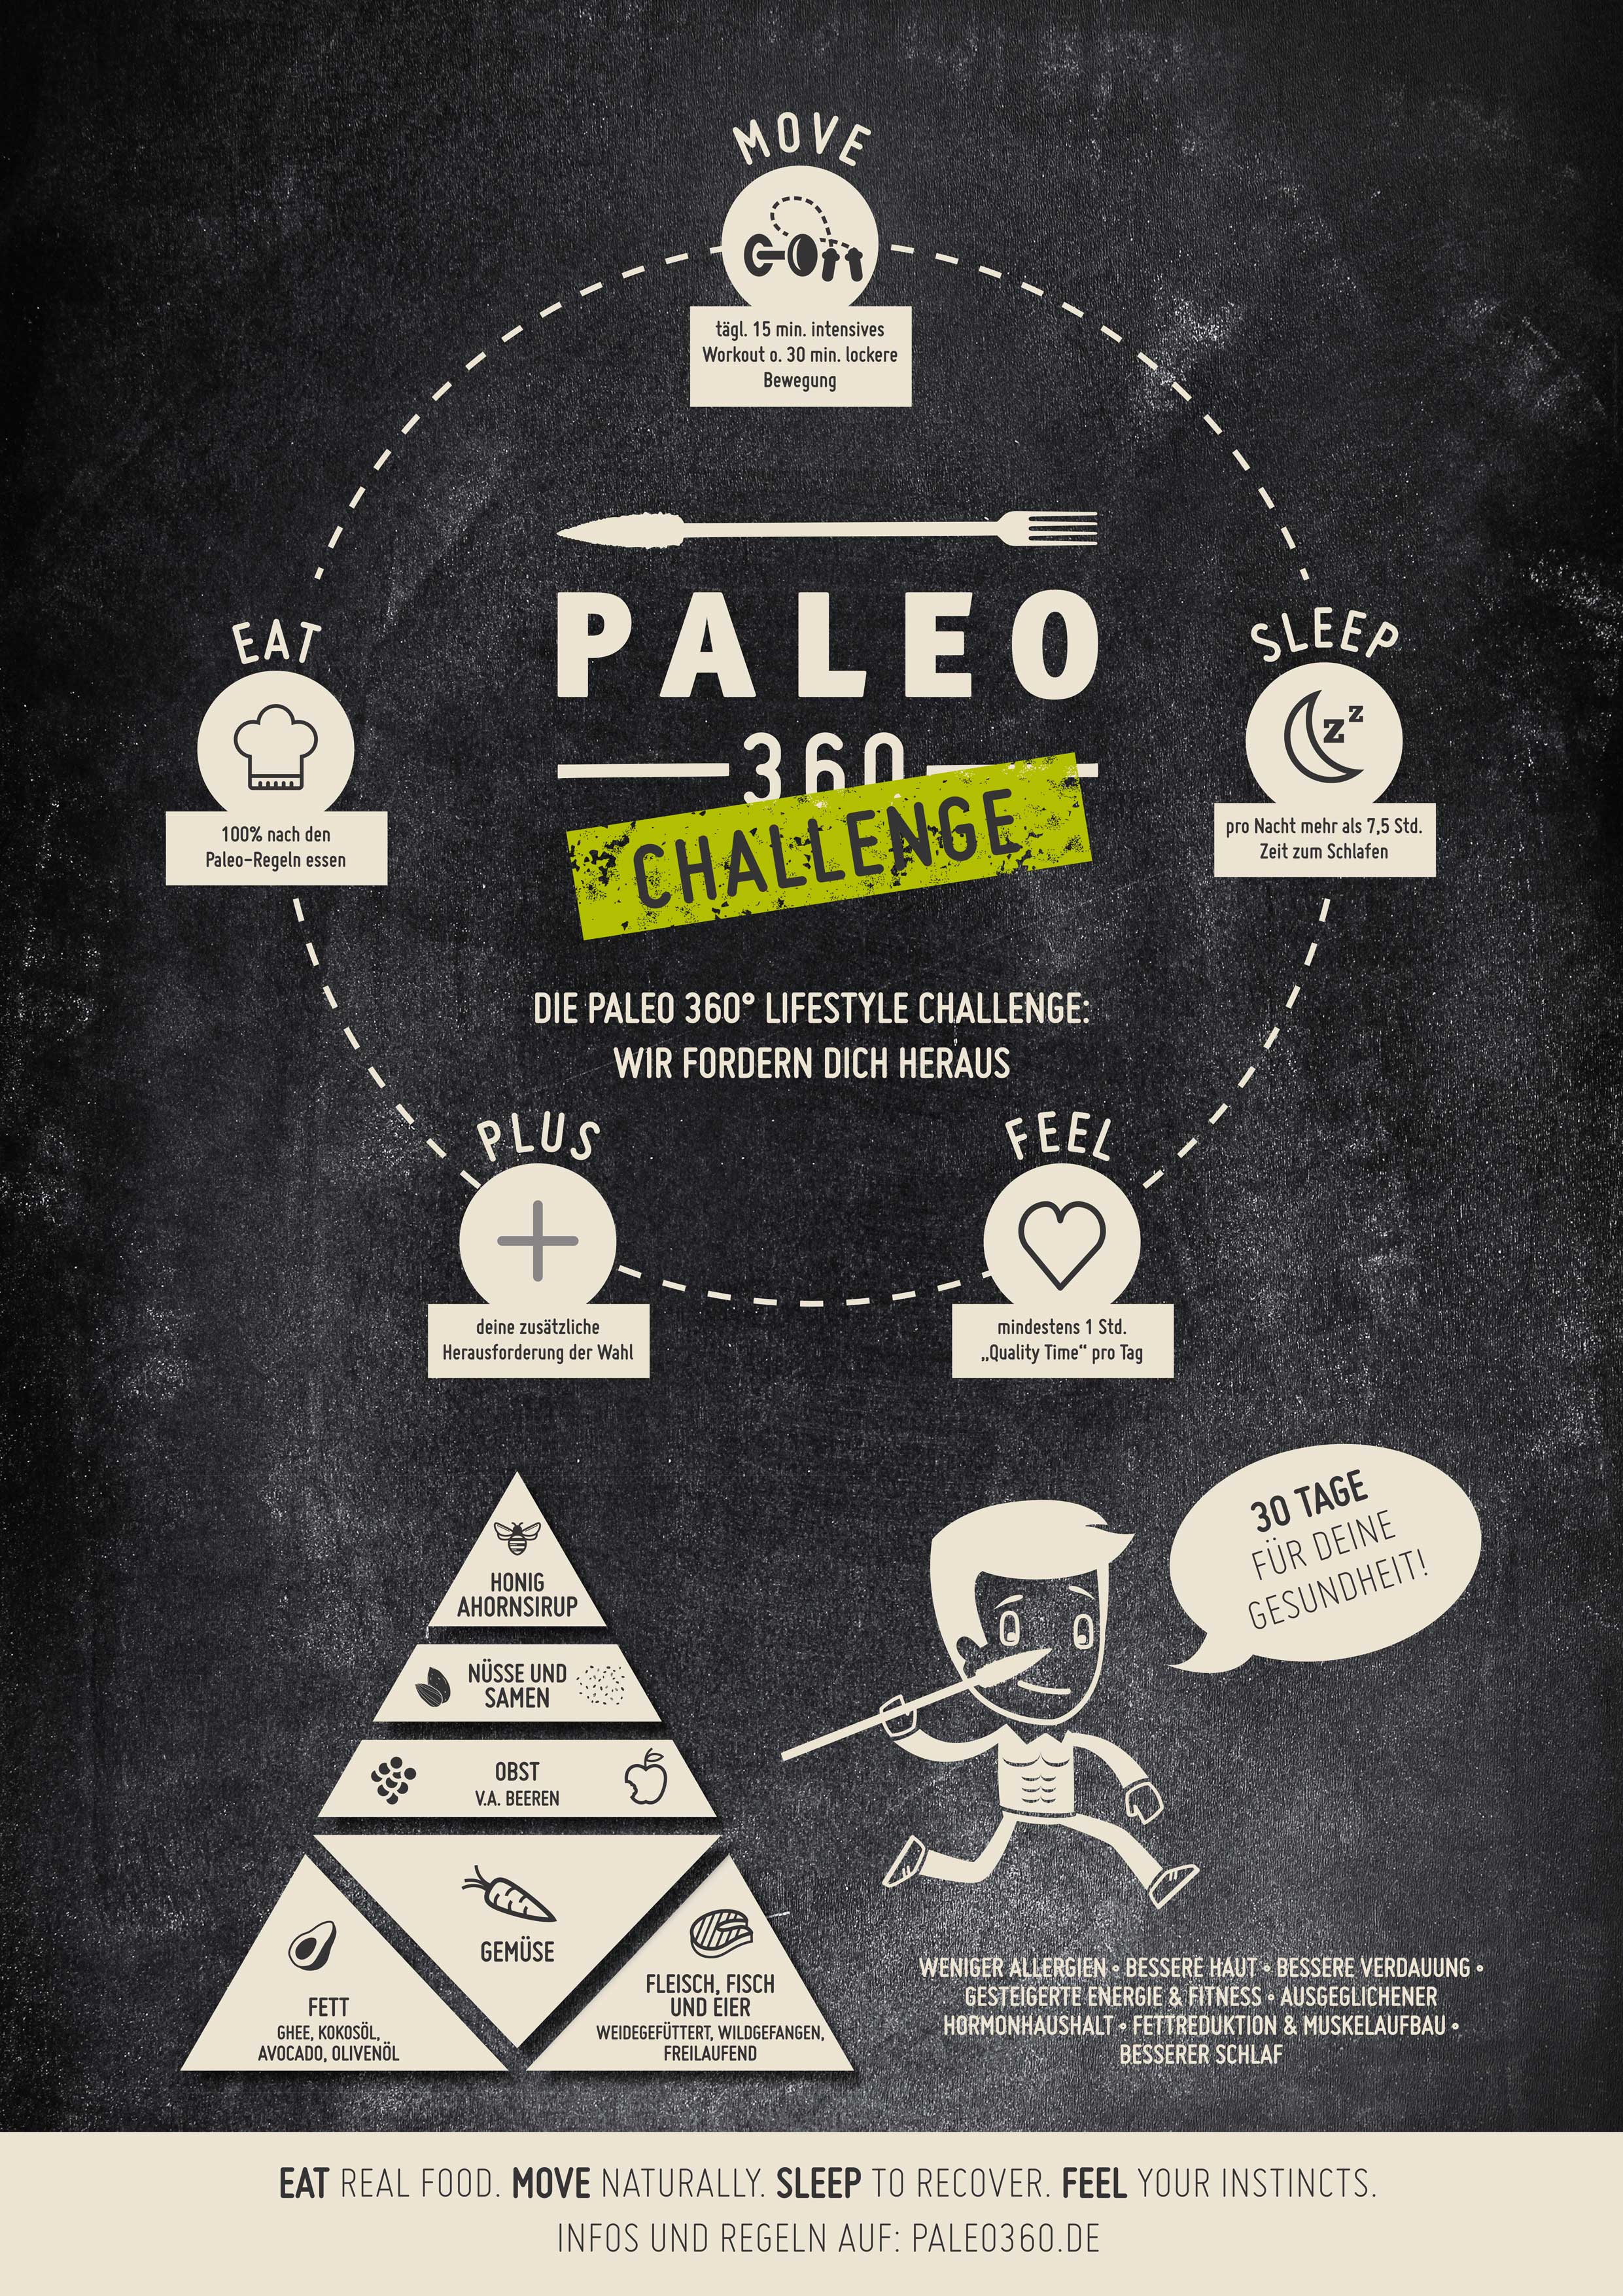 30 Tage Challenge Paleo360 Challenge Paleo360 De